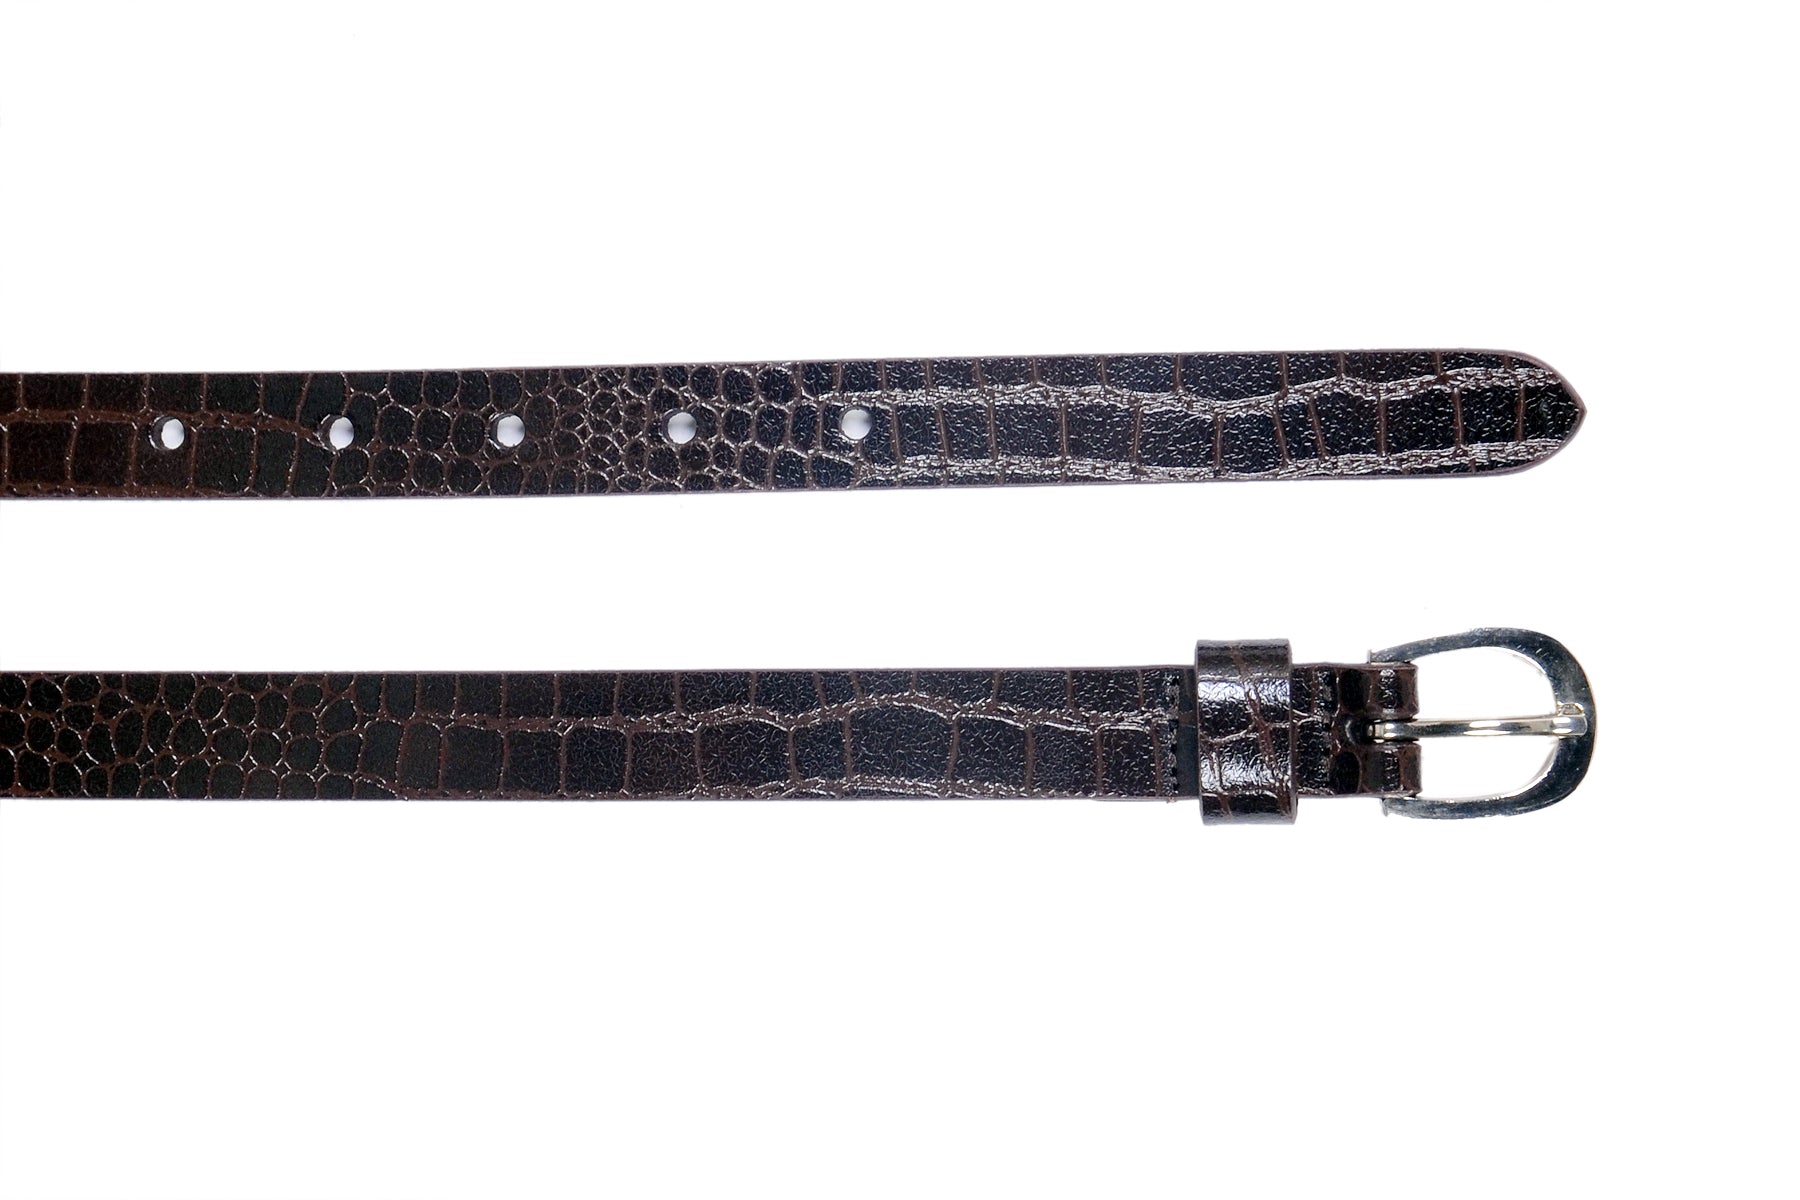 stylish-Brown-belt